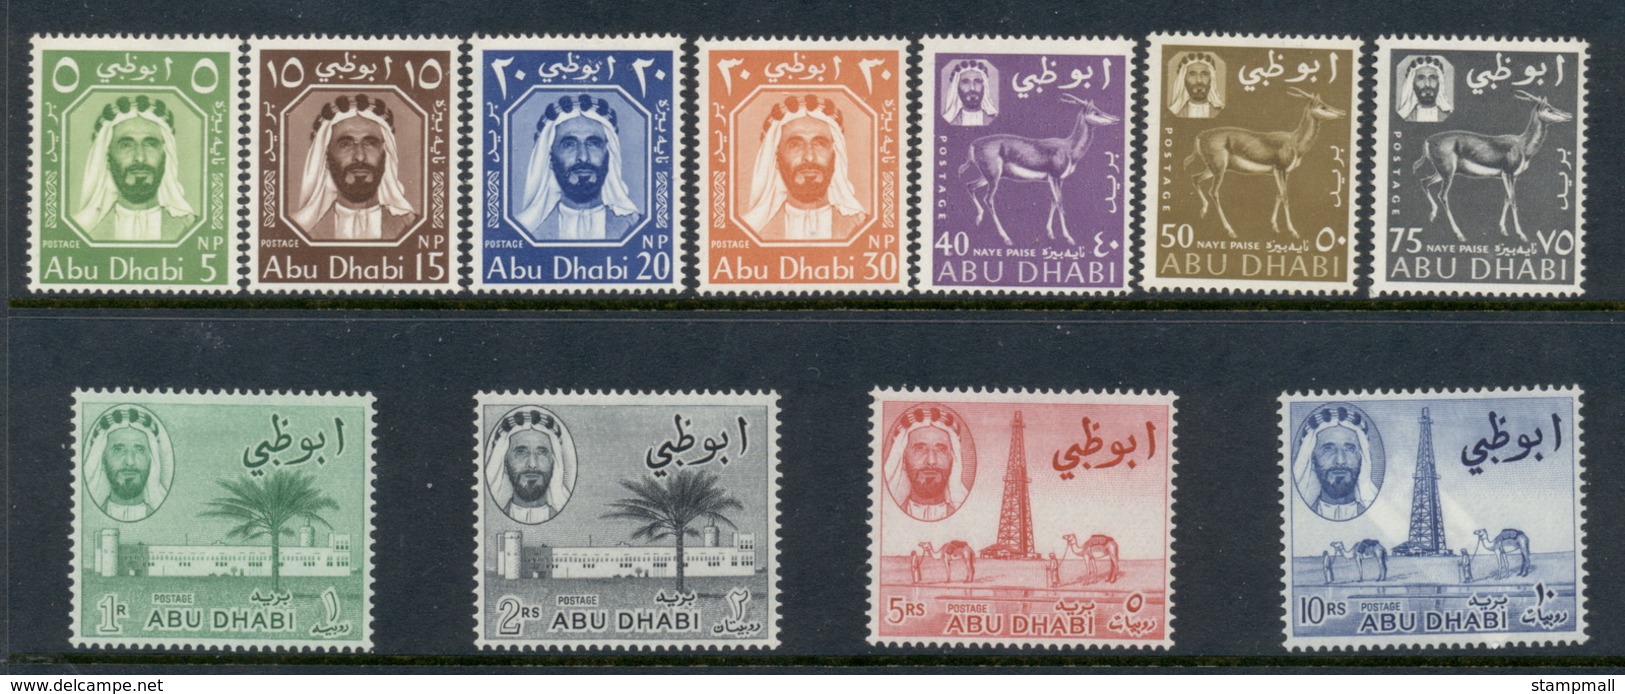 Abu Dhabi 1964 Pictorials, Sheik Shakbut Bin Sultan & Palace MUH - Abu Dhabi